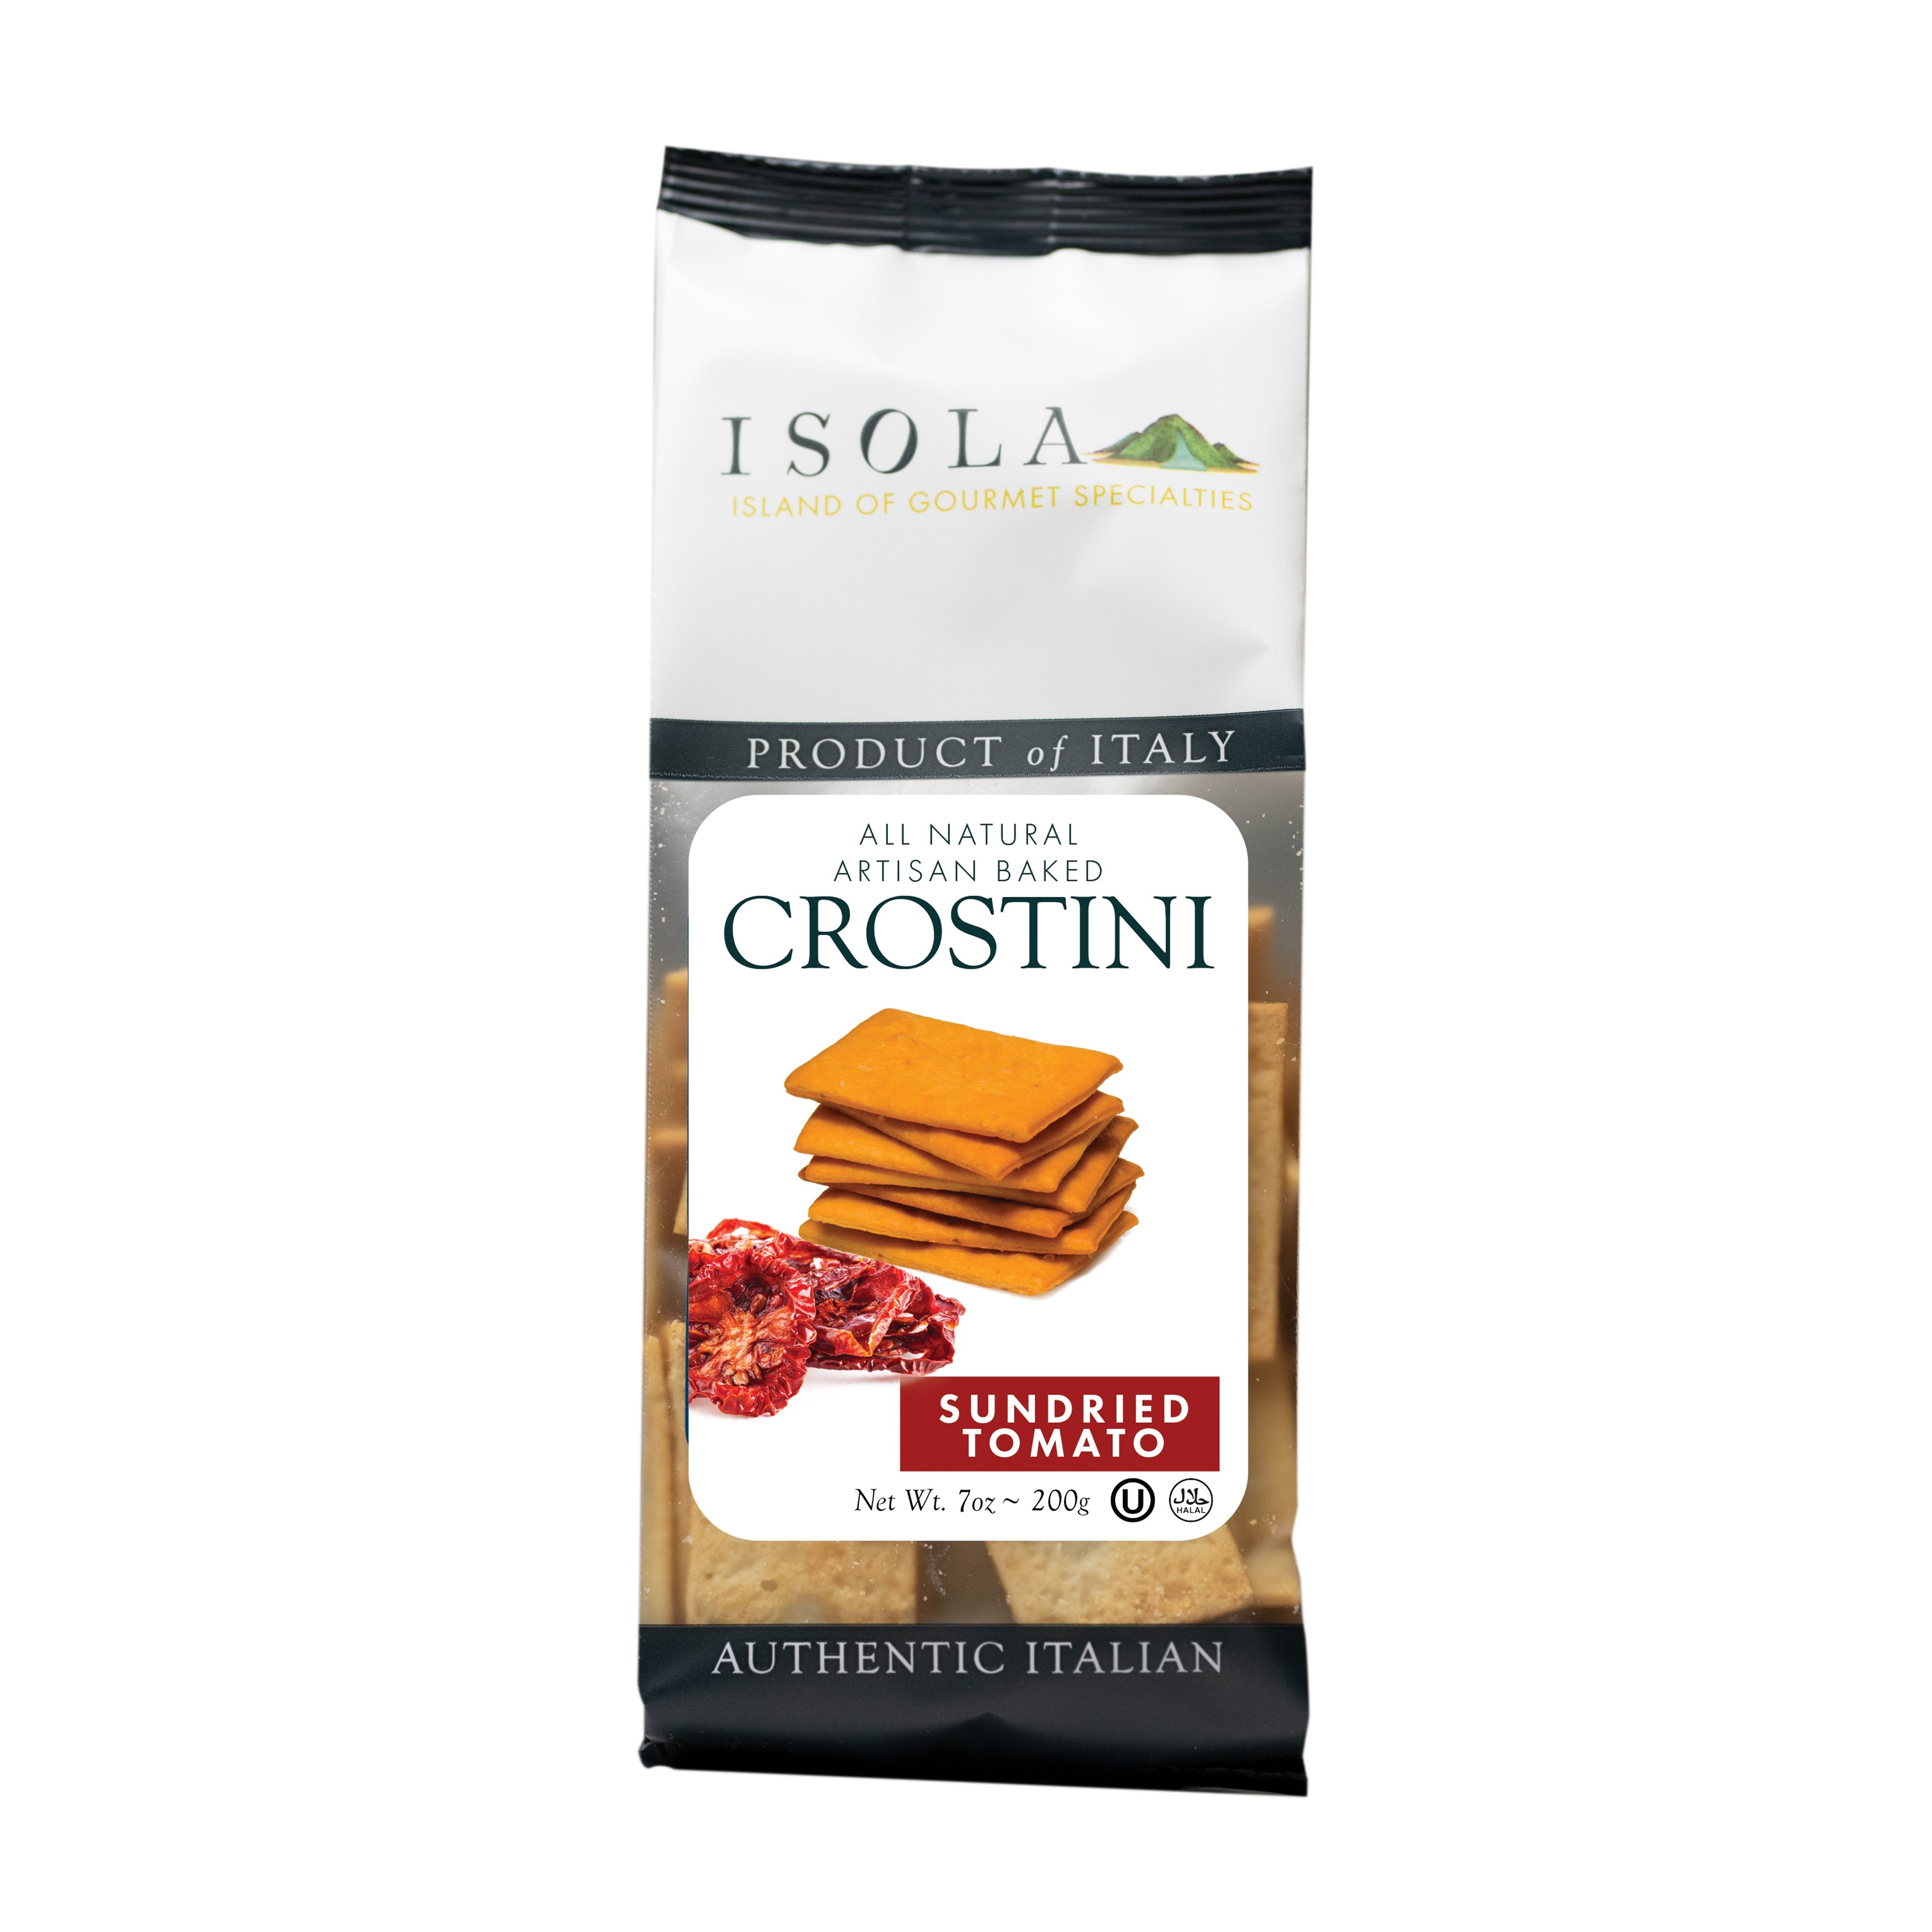 Crostini - igourmet